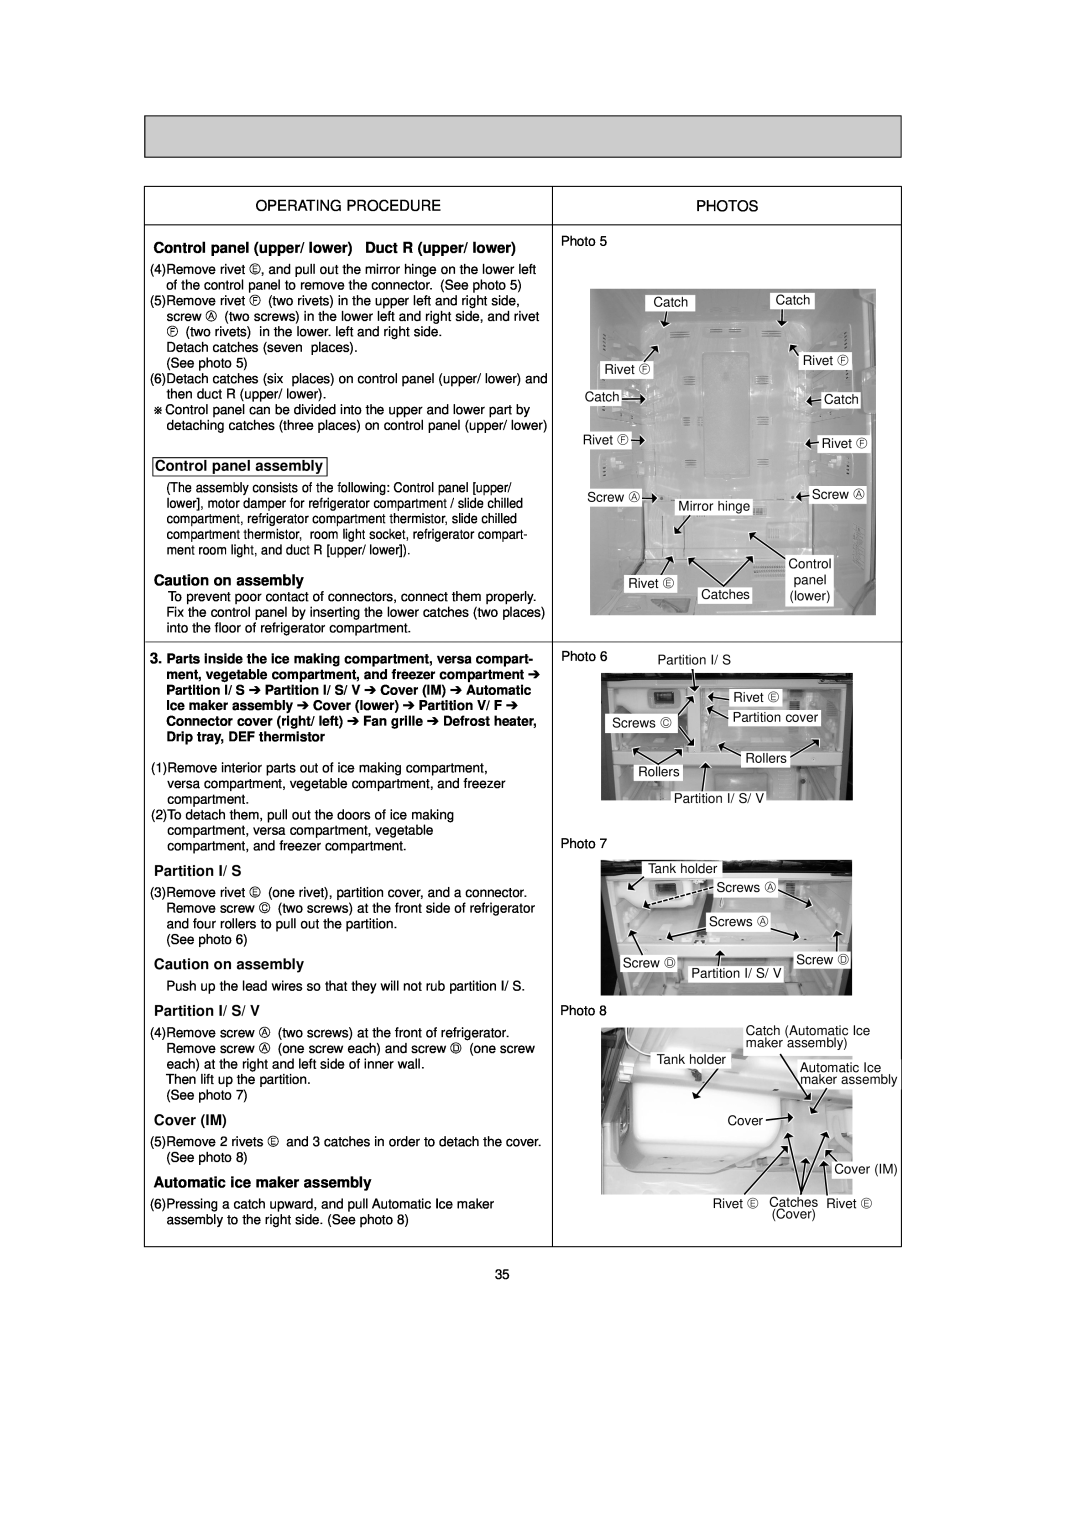 Mitsubishi Electronics MR-G50J-SS-NZ Control panel upper/ lower Duct R upper/ lower, Control panel assembly, Cover IM 